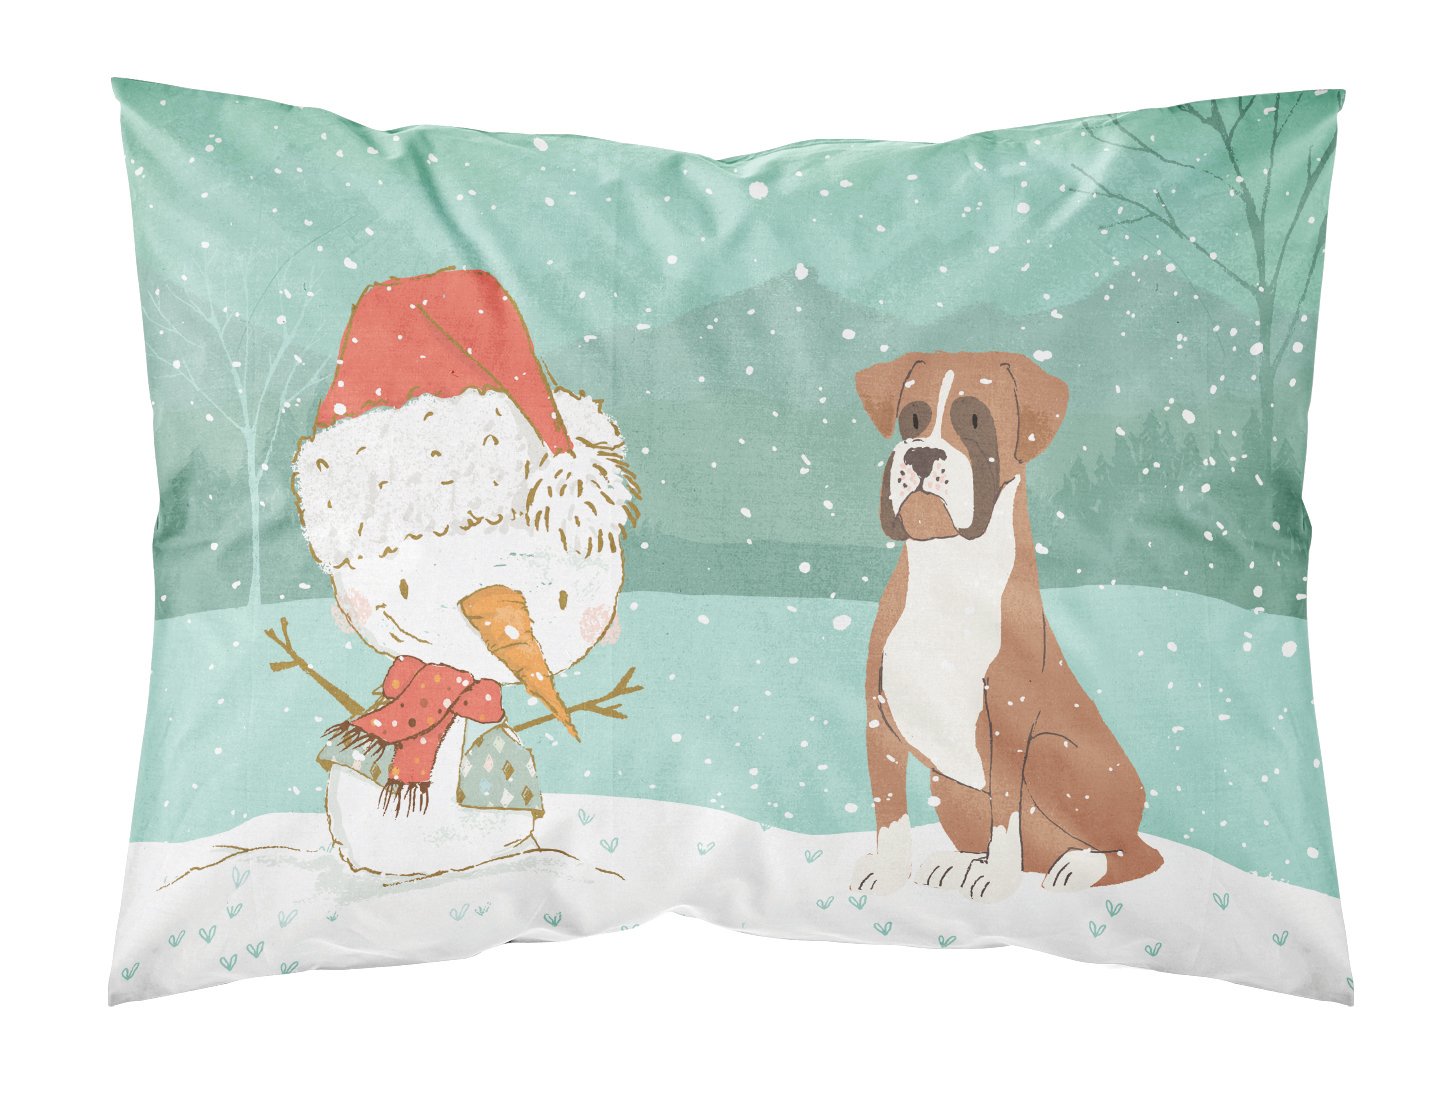 Fawn Boxer and Snowman Christmas Fabric Standard Pillowcase CK2036PILLOWCASE by Caroline's Treasures